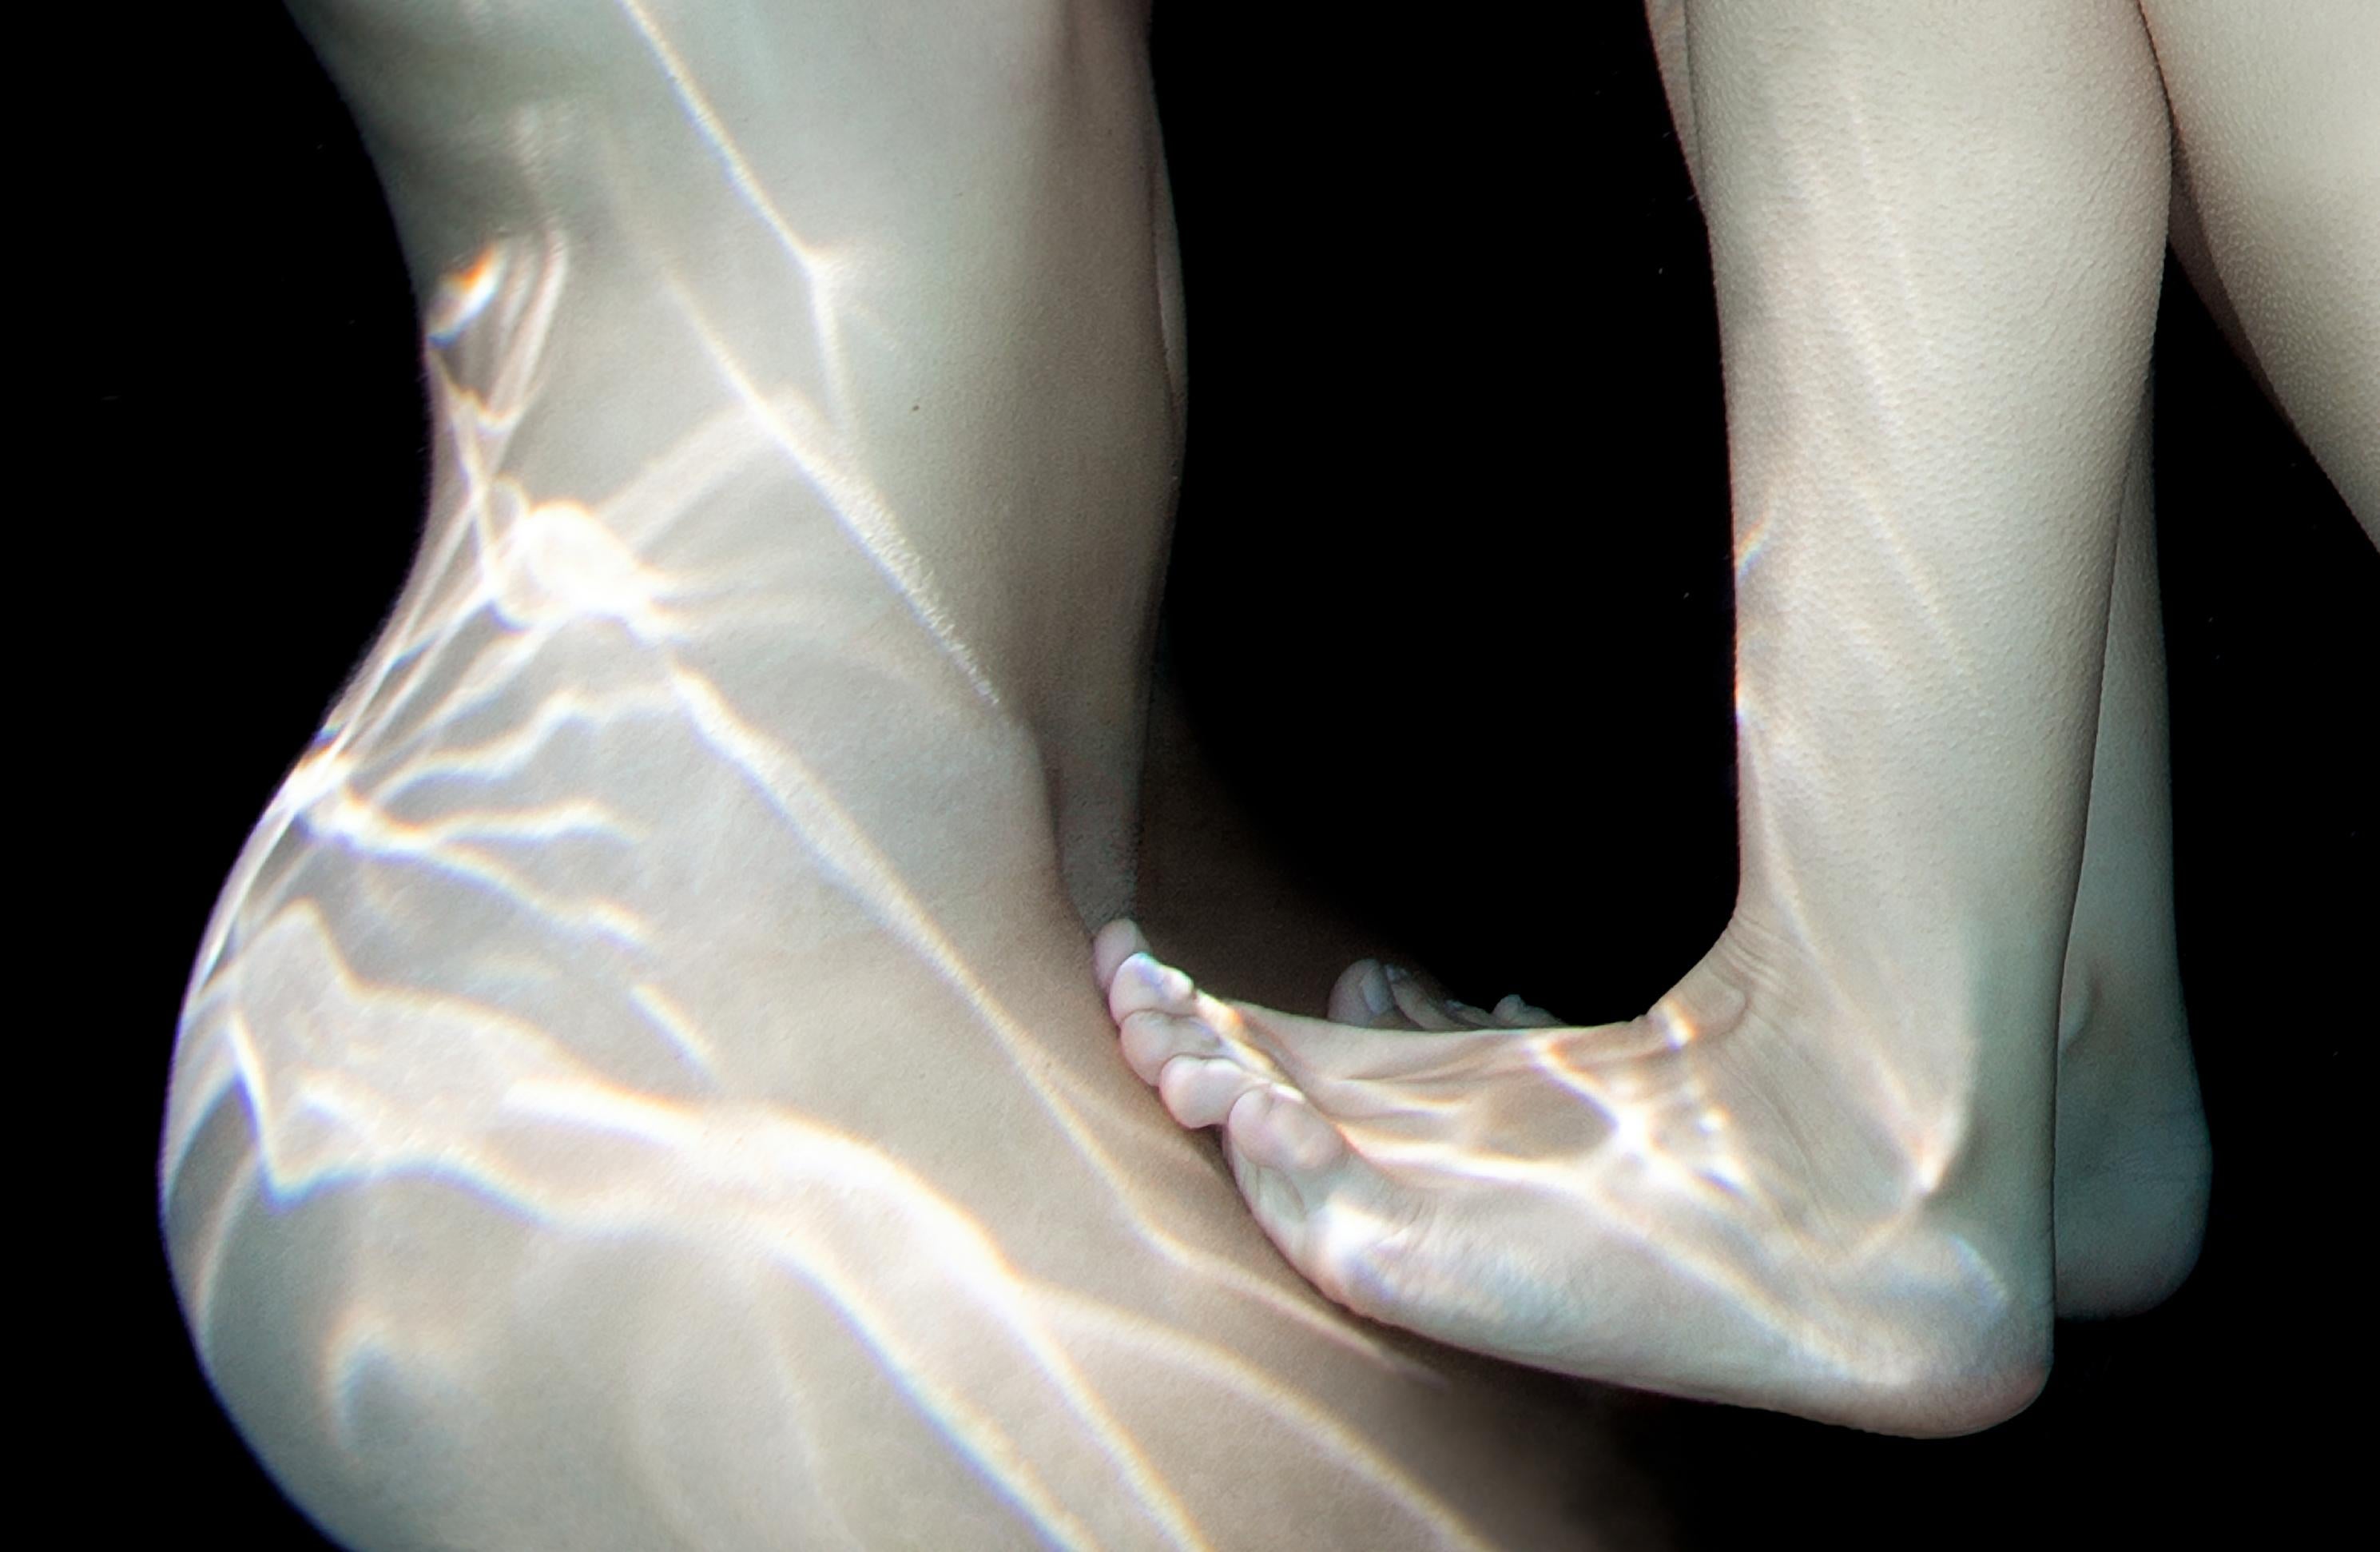 Porcelain - underwater nude photograph - print on aluminum 24